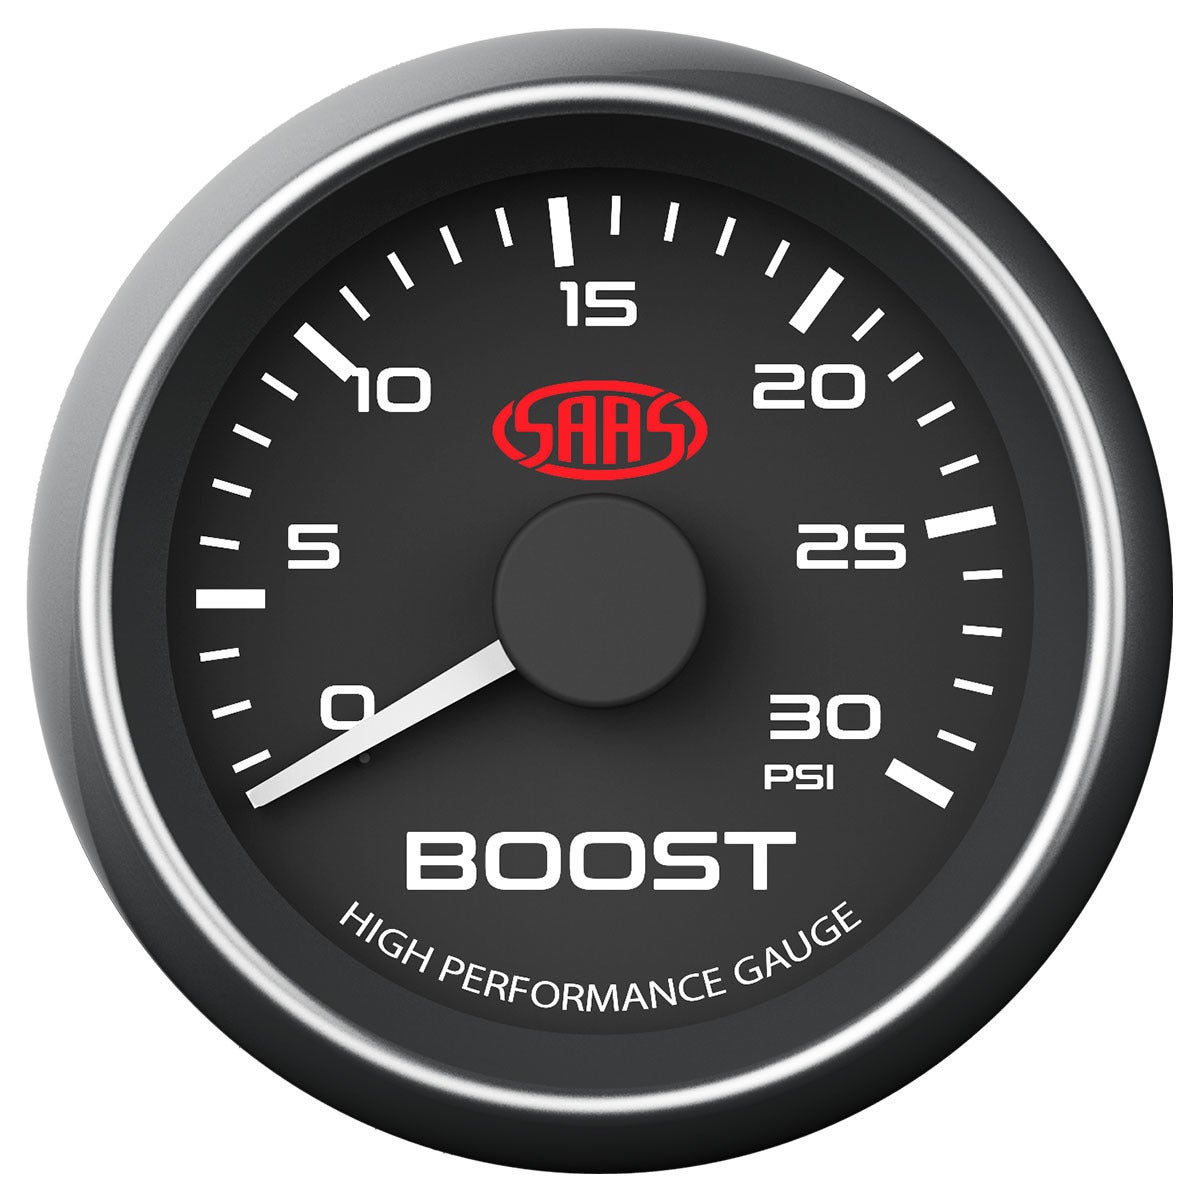 SAAS boost gauge 2" black 0-30psi for Toyota Landcruiser HZJ79R 1HZ 4.2 DI 